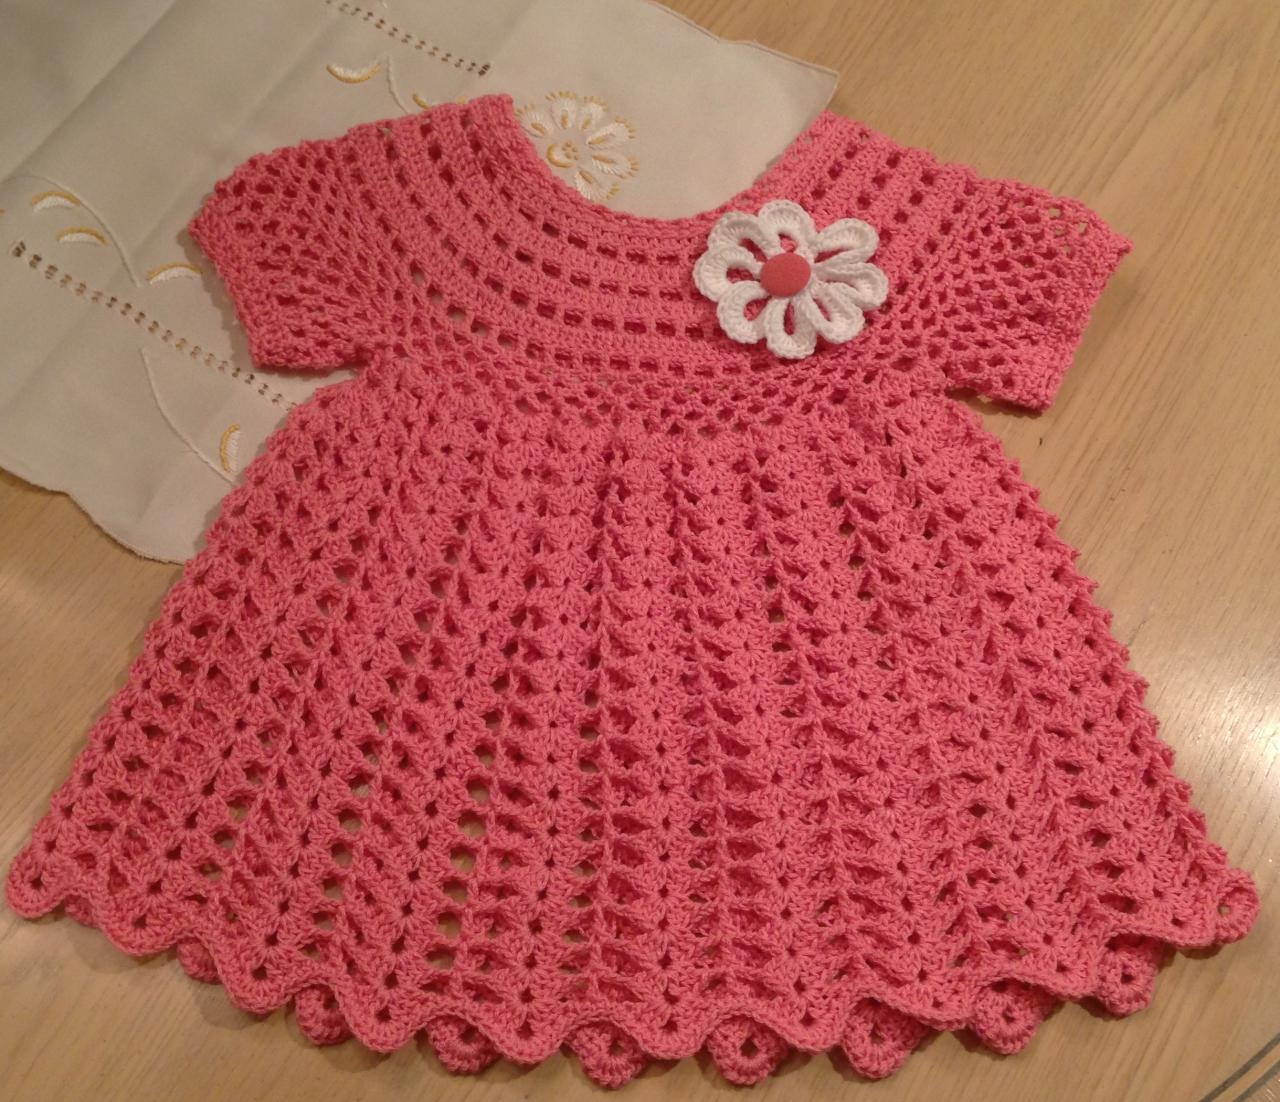 Crochet Toddler Dress Pattern Peaches And Cream Dress Crochet Pattern Pdf12 097 On Luulla